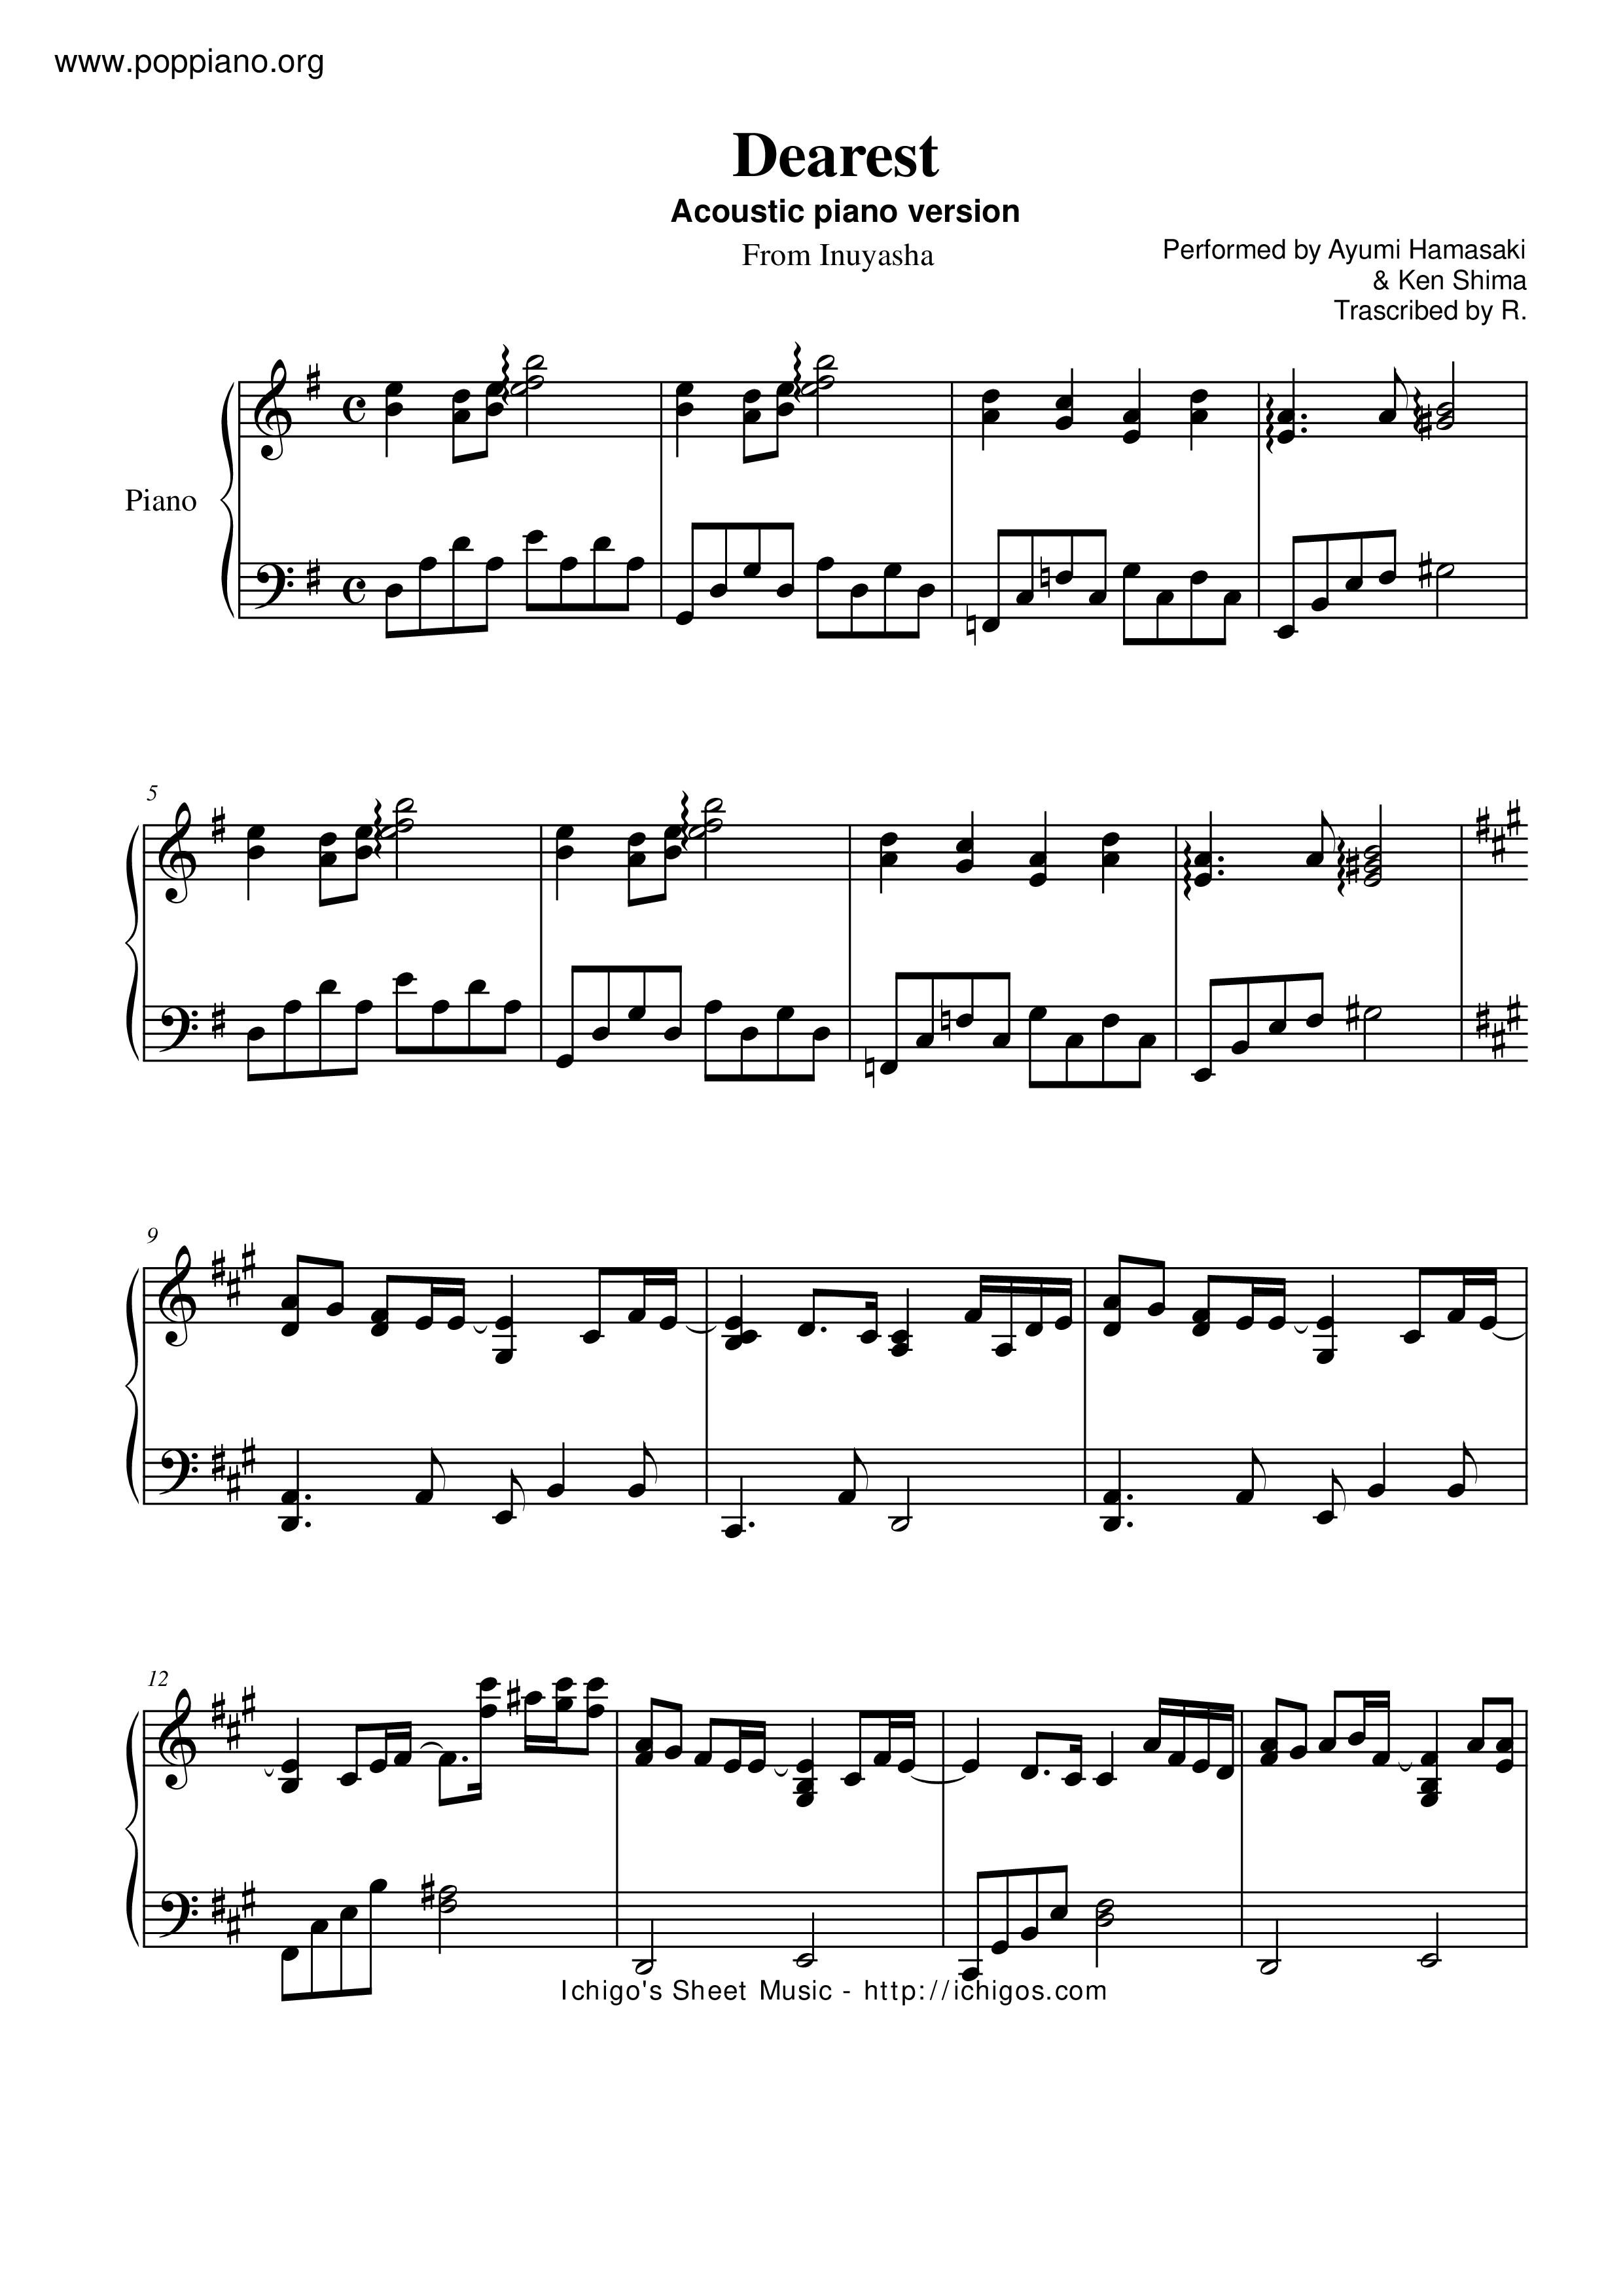 Dearest - Accoustic Piano Versionピアノ譜